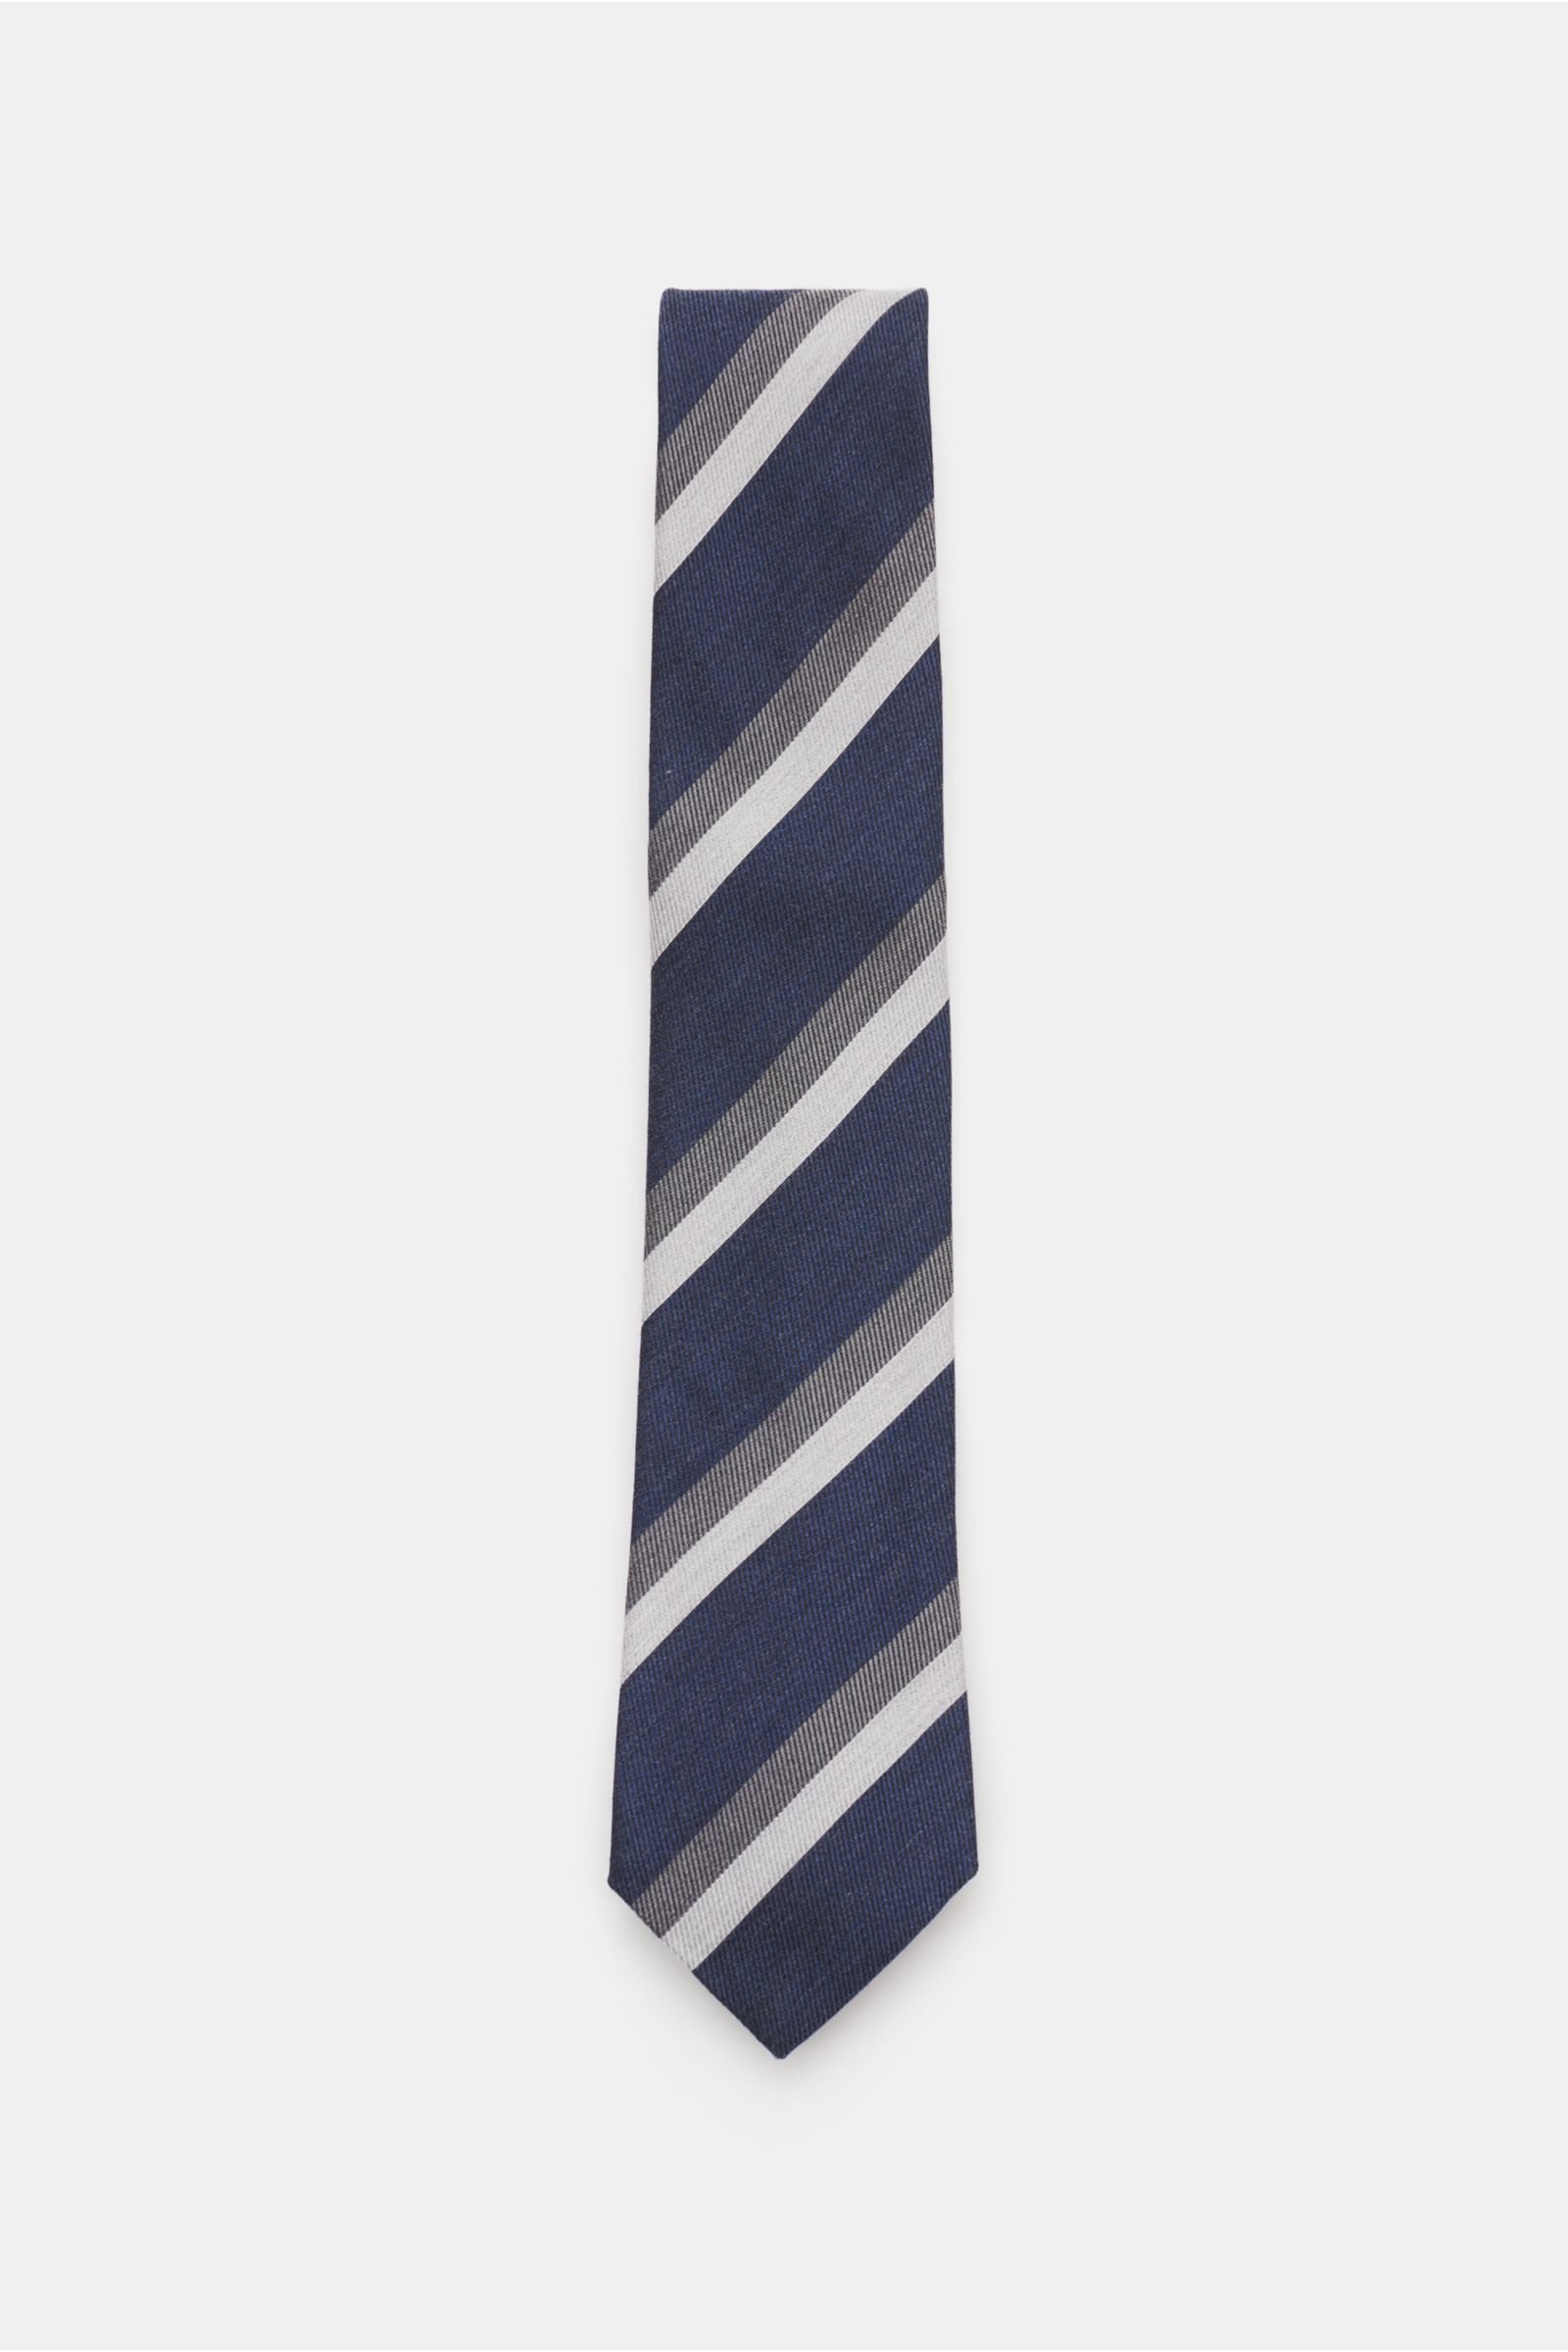 Krawatte graublau/grau gestreift